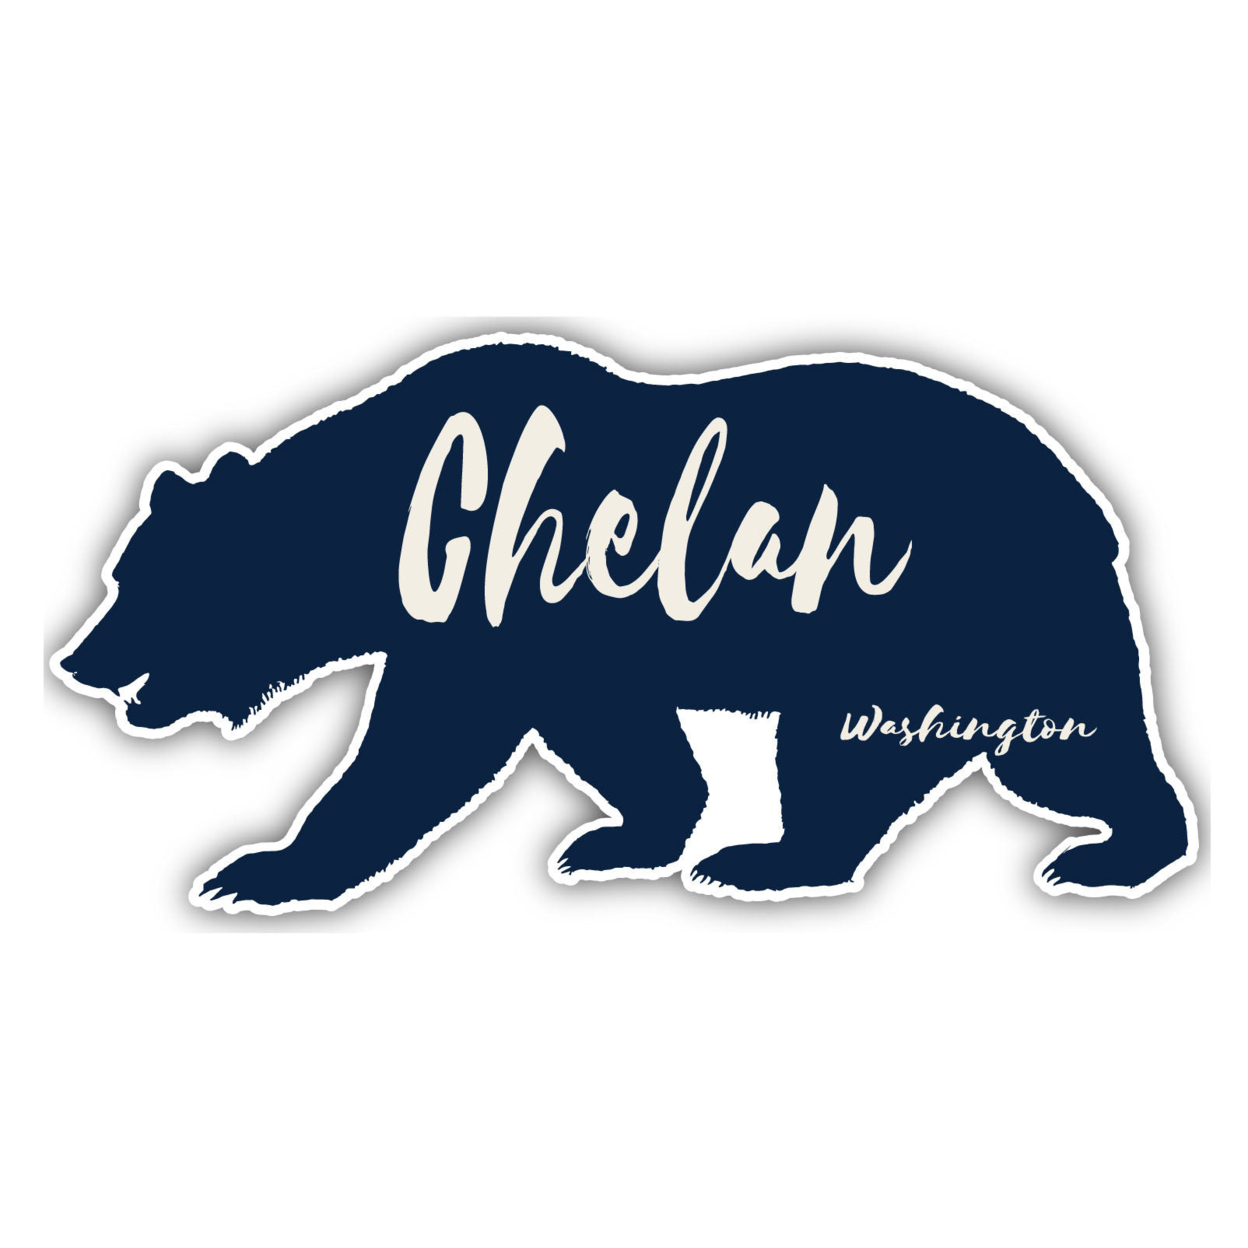 Chelan Washington Souvenir Decorative Stickers (Choose Theme And Size) - Single Unit, 10-Inch, Camp Life